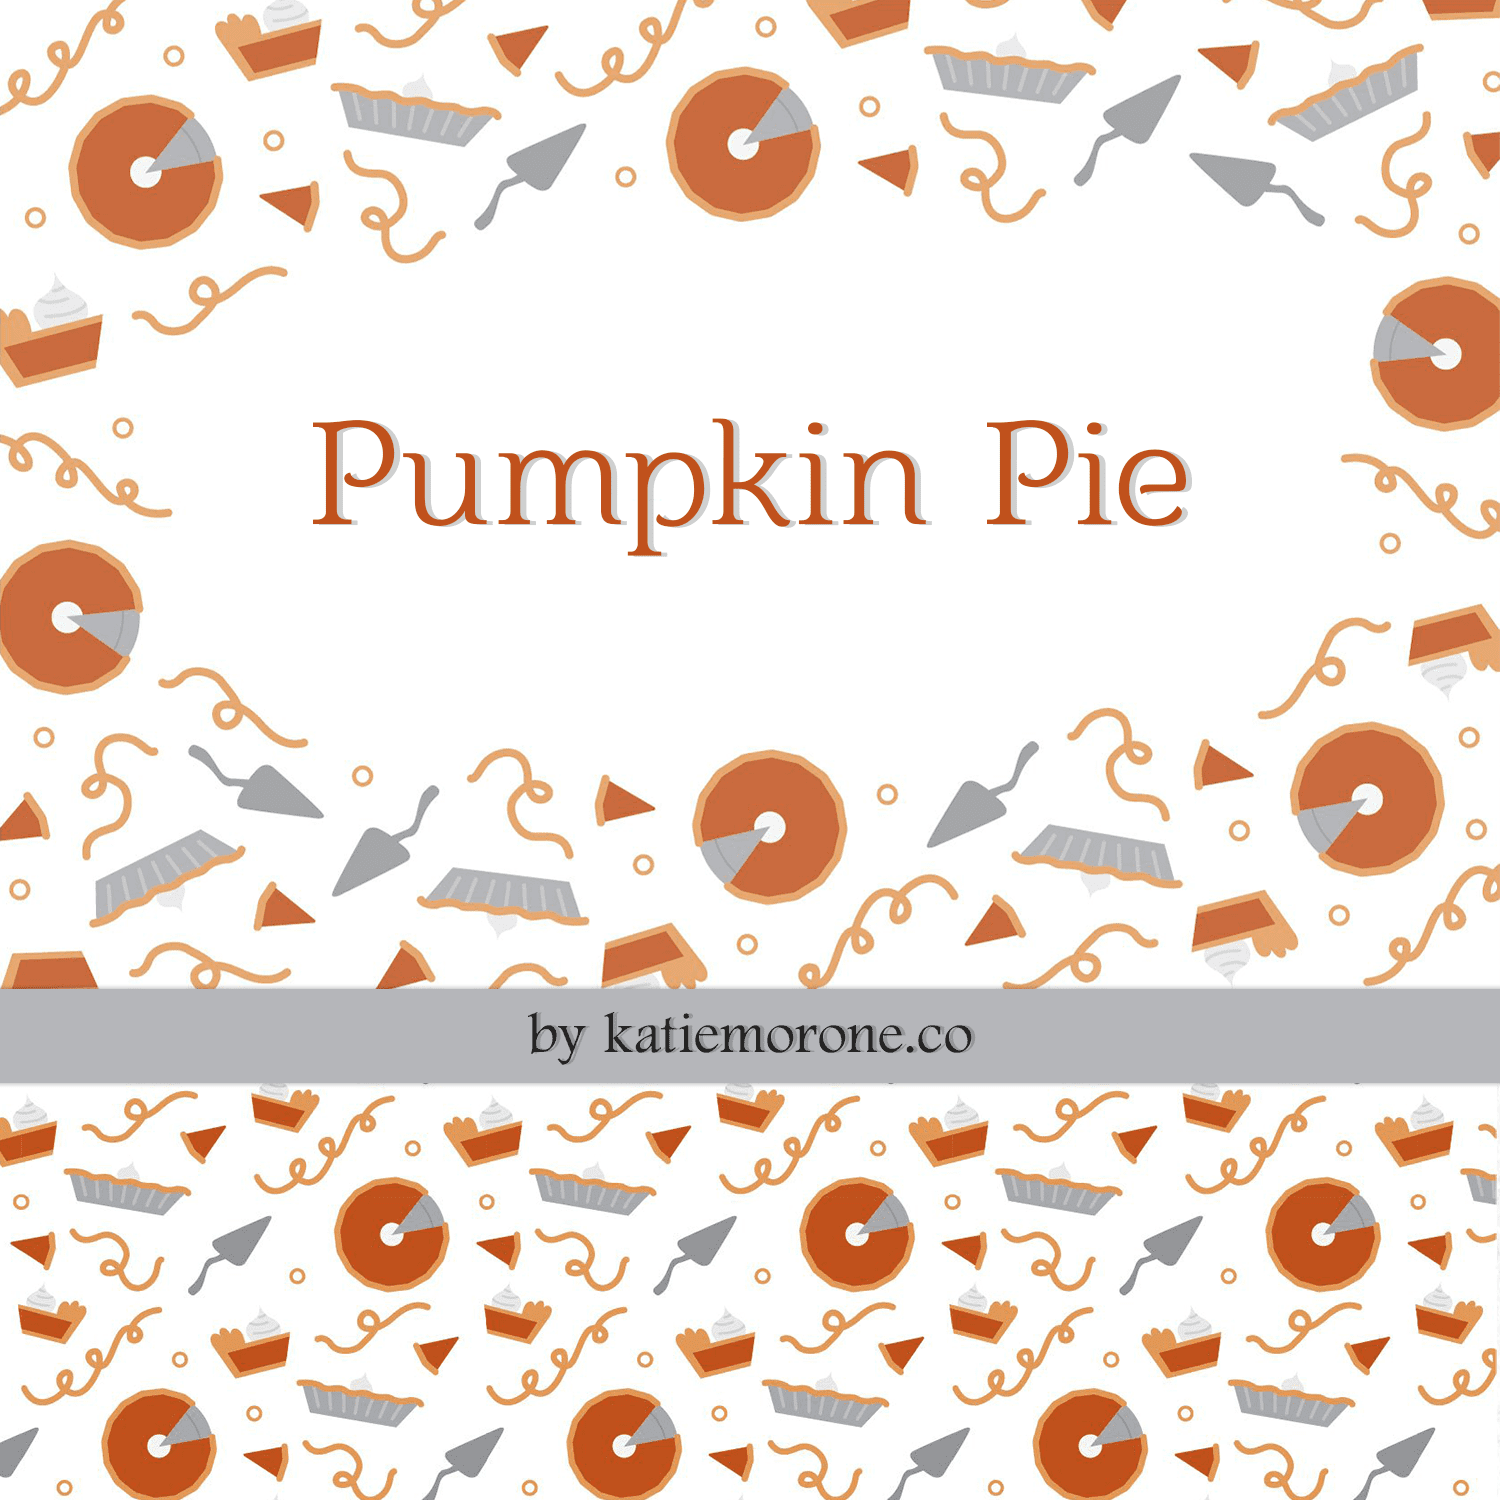 Pumpkin Pie cover.